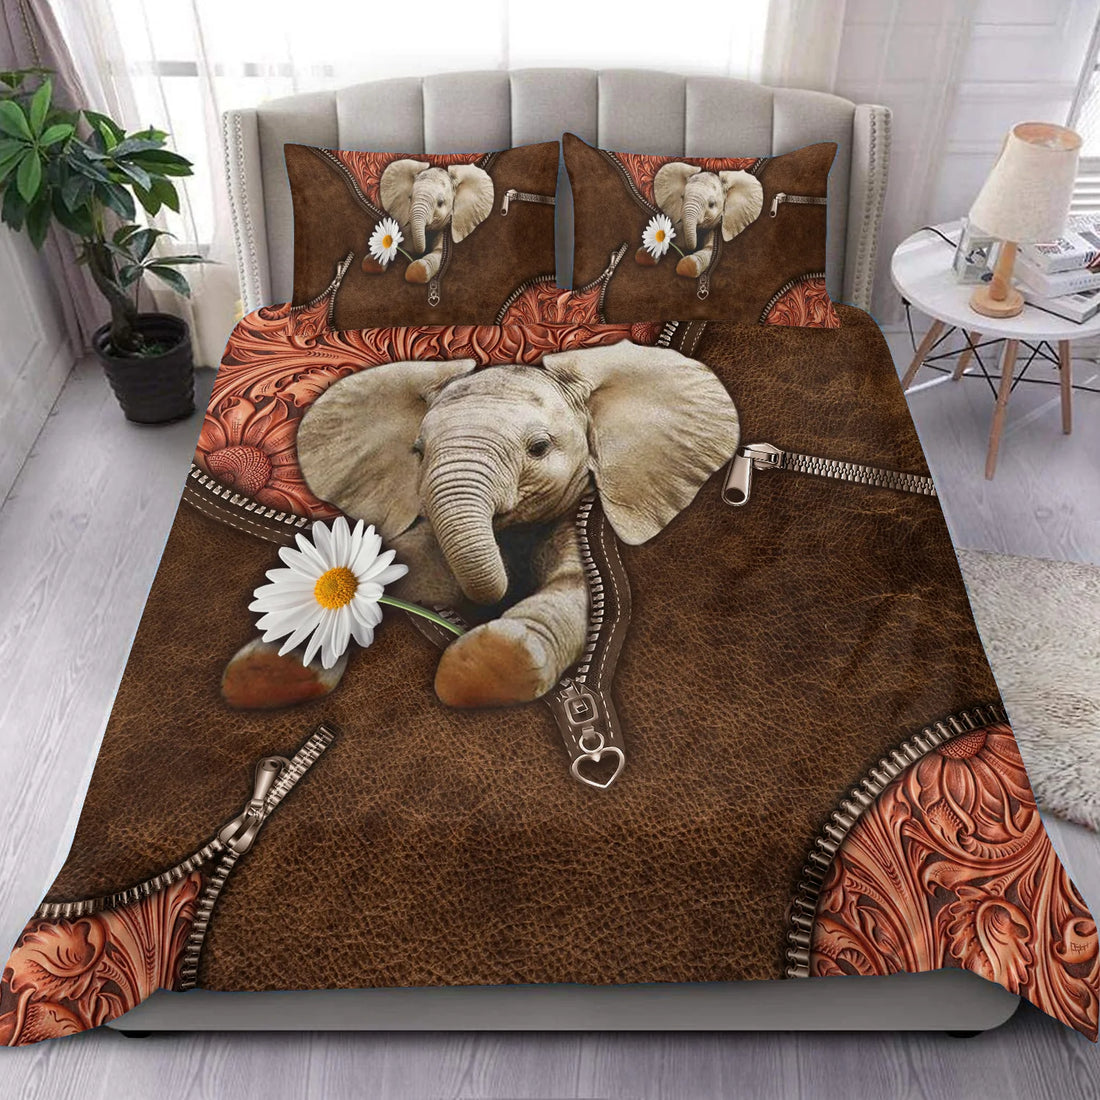 Elephant Bedding Set, Gift for Elephant Lovers 